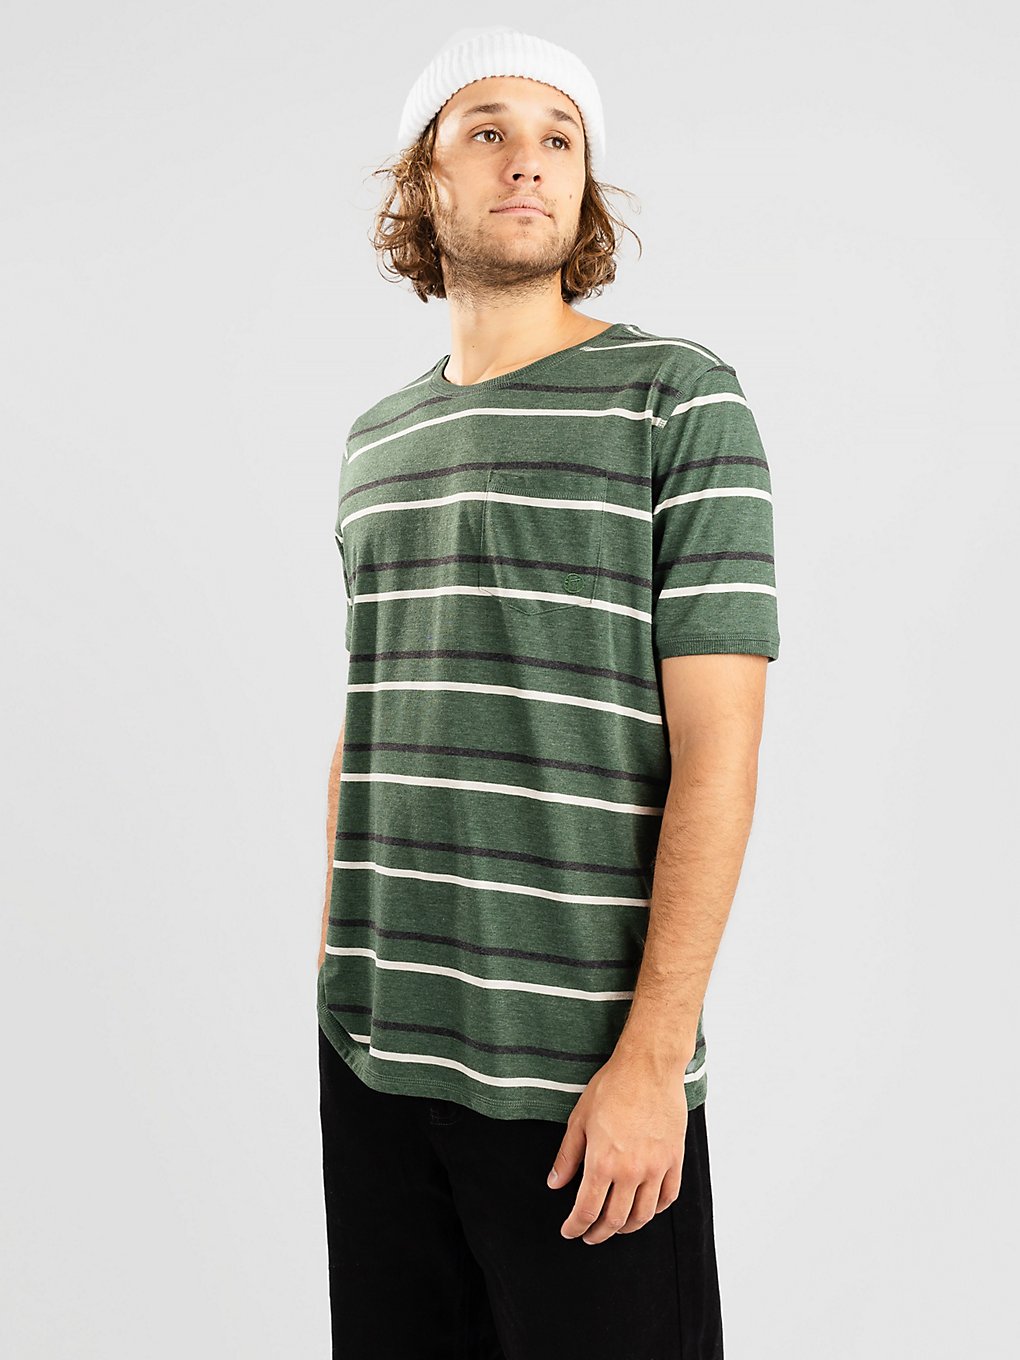 Kazane Moss Stripe T-Shirt oatmeal hthr kaufen